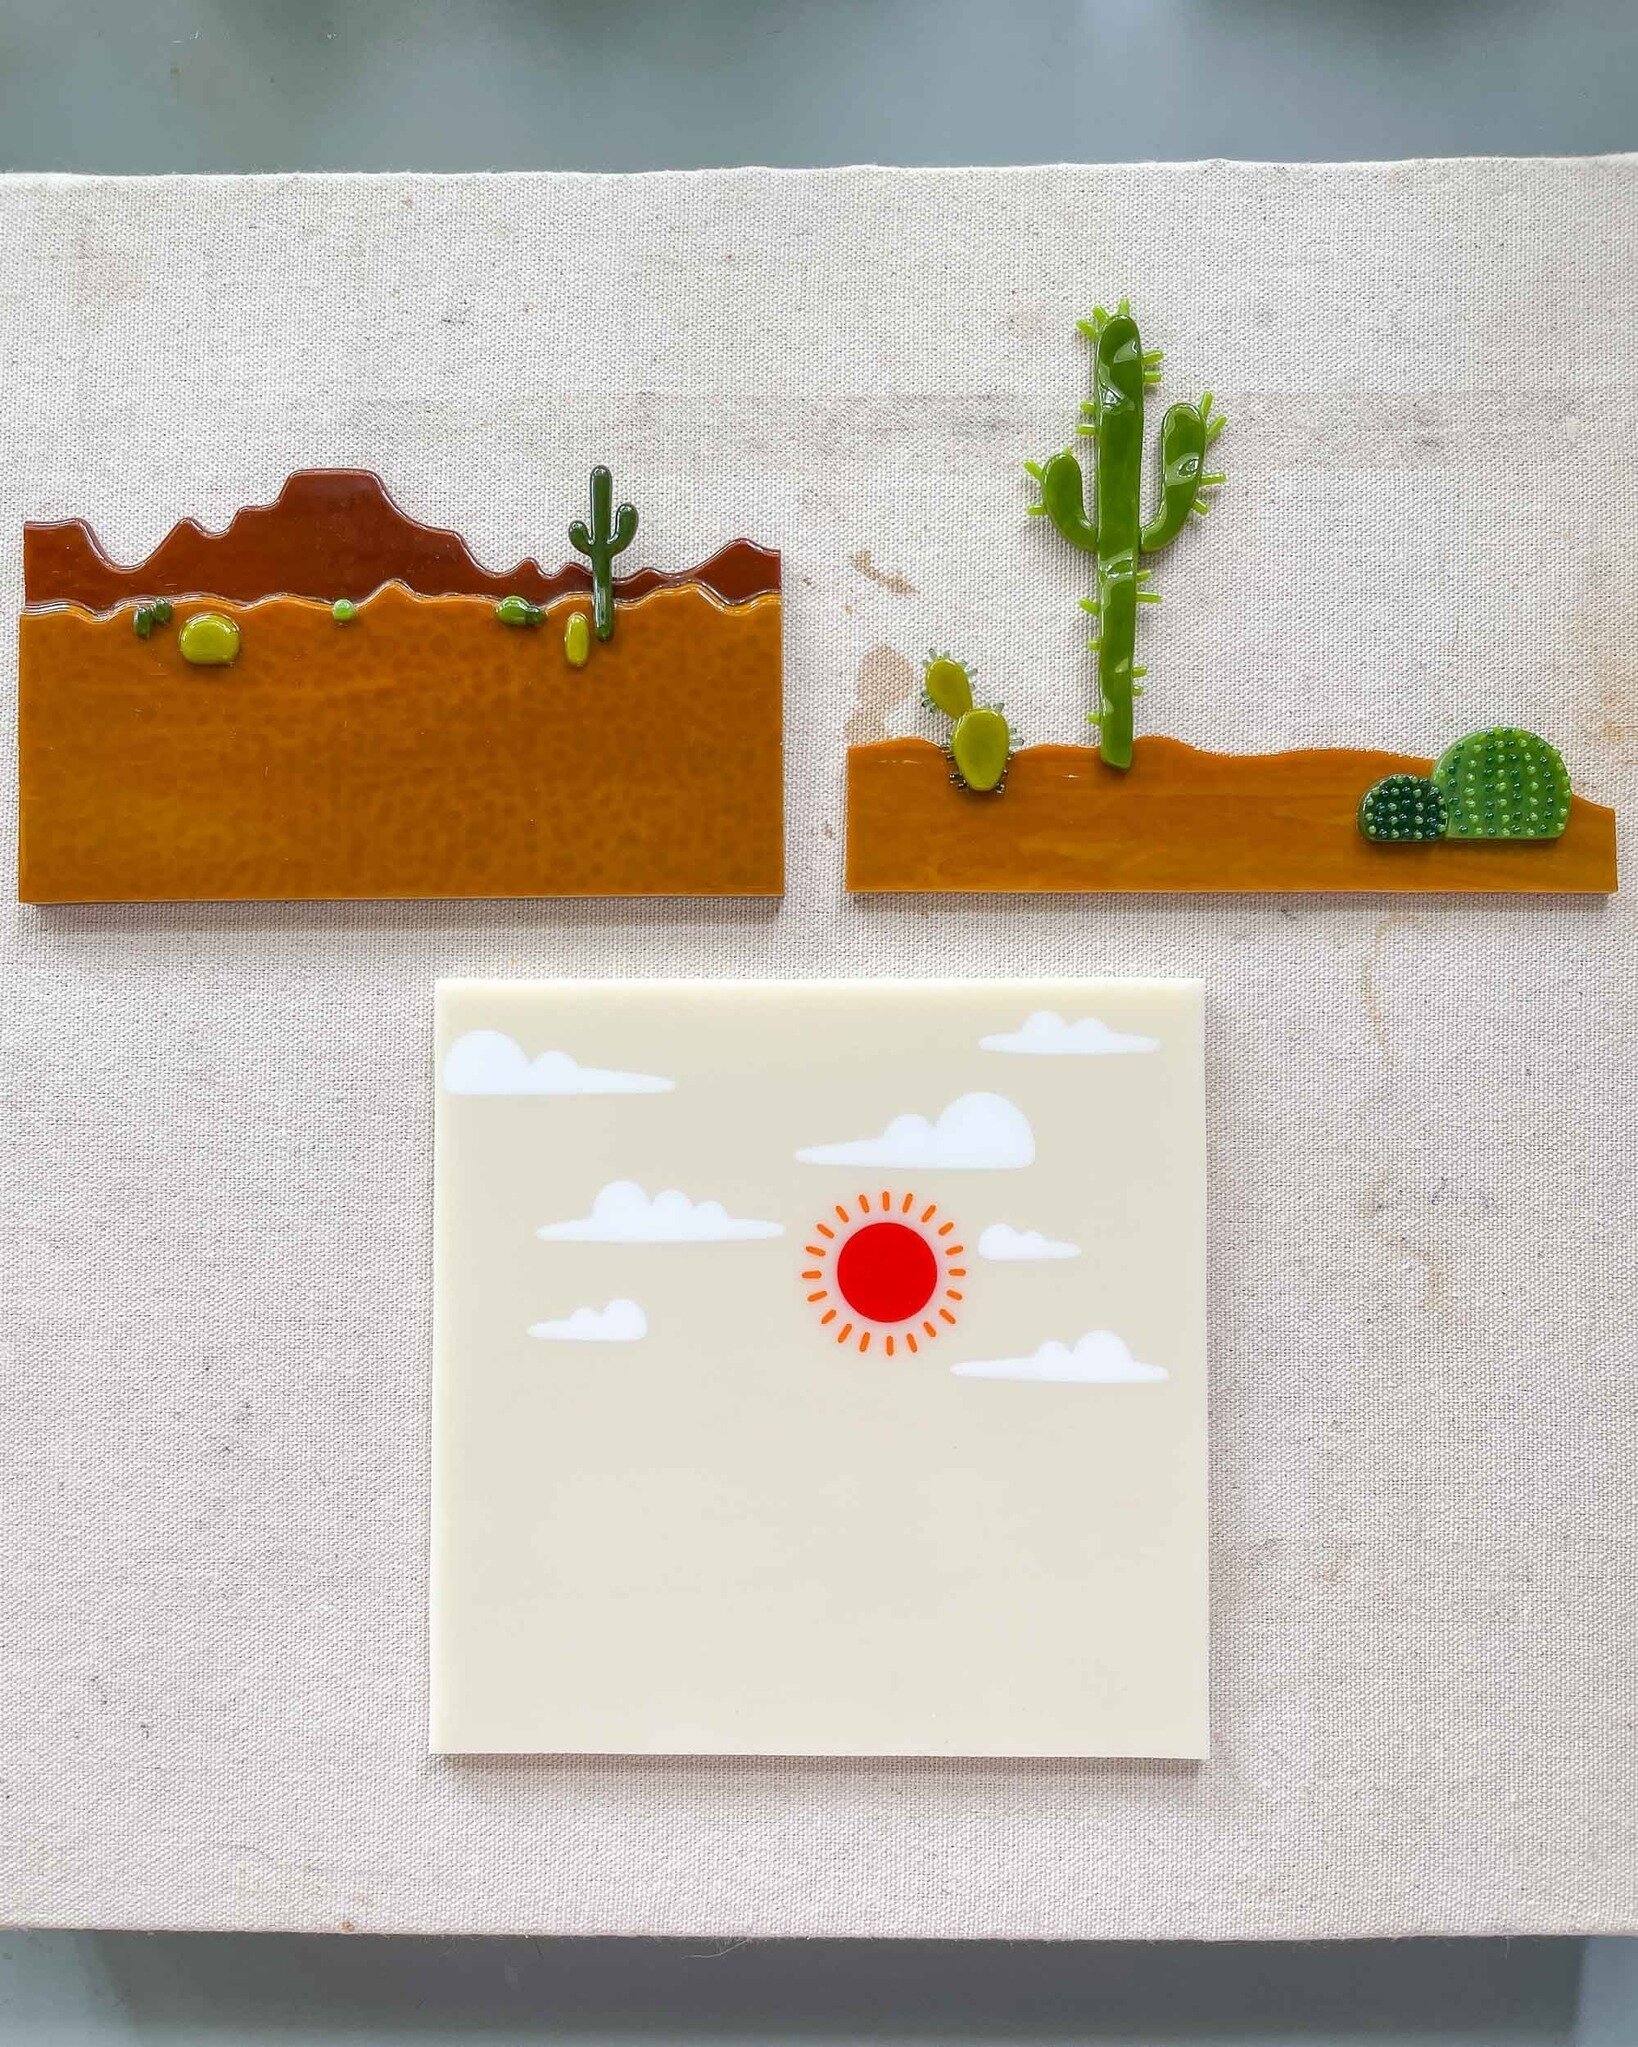 The separation anxiety is palpable.⁣
⁣
⁣
⁣
⁣
⁣
#fusedglass #cactusgram #desertvibes #stainedglass #cactuslover #saguaro #natureart #artglass #desertlife #desertlandscape